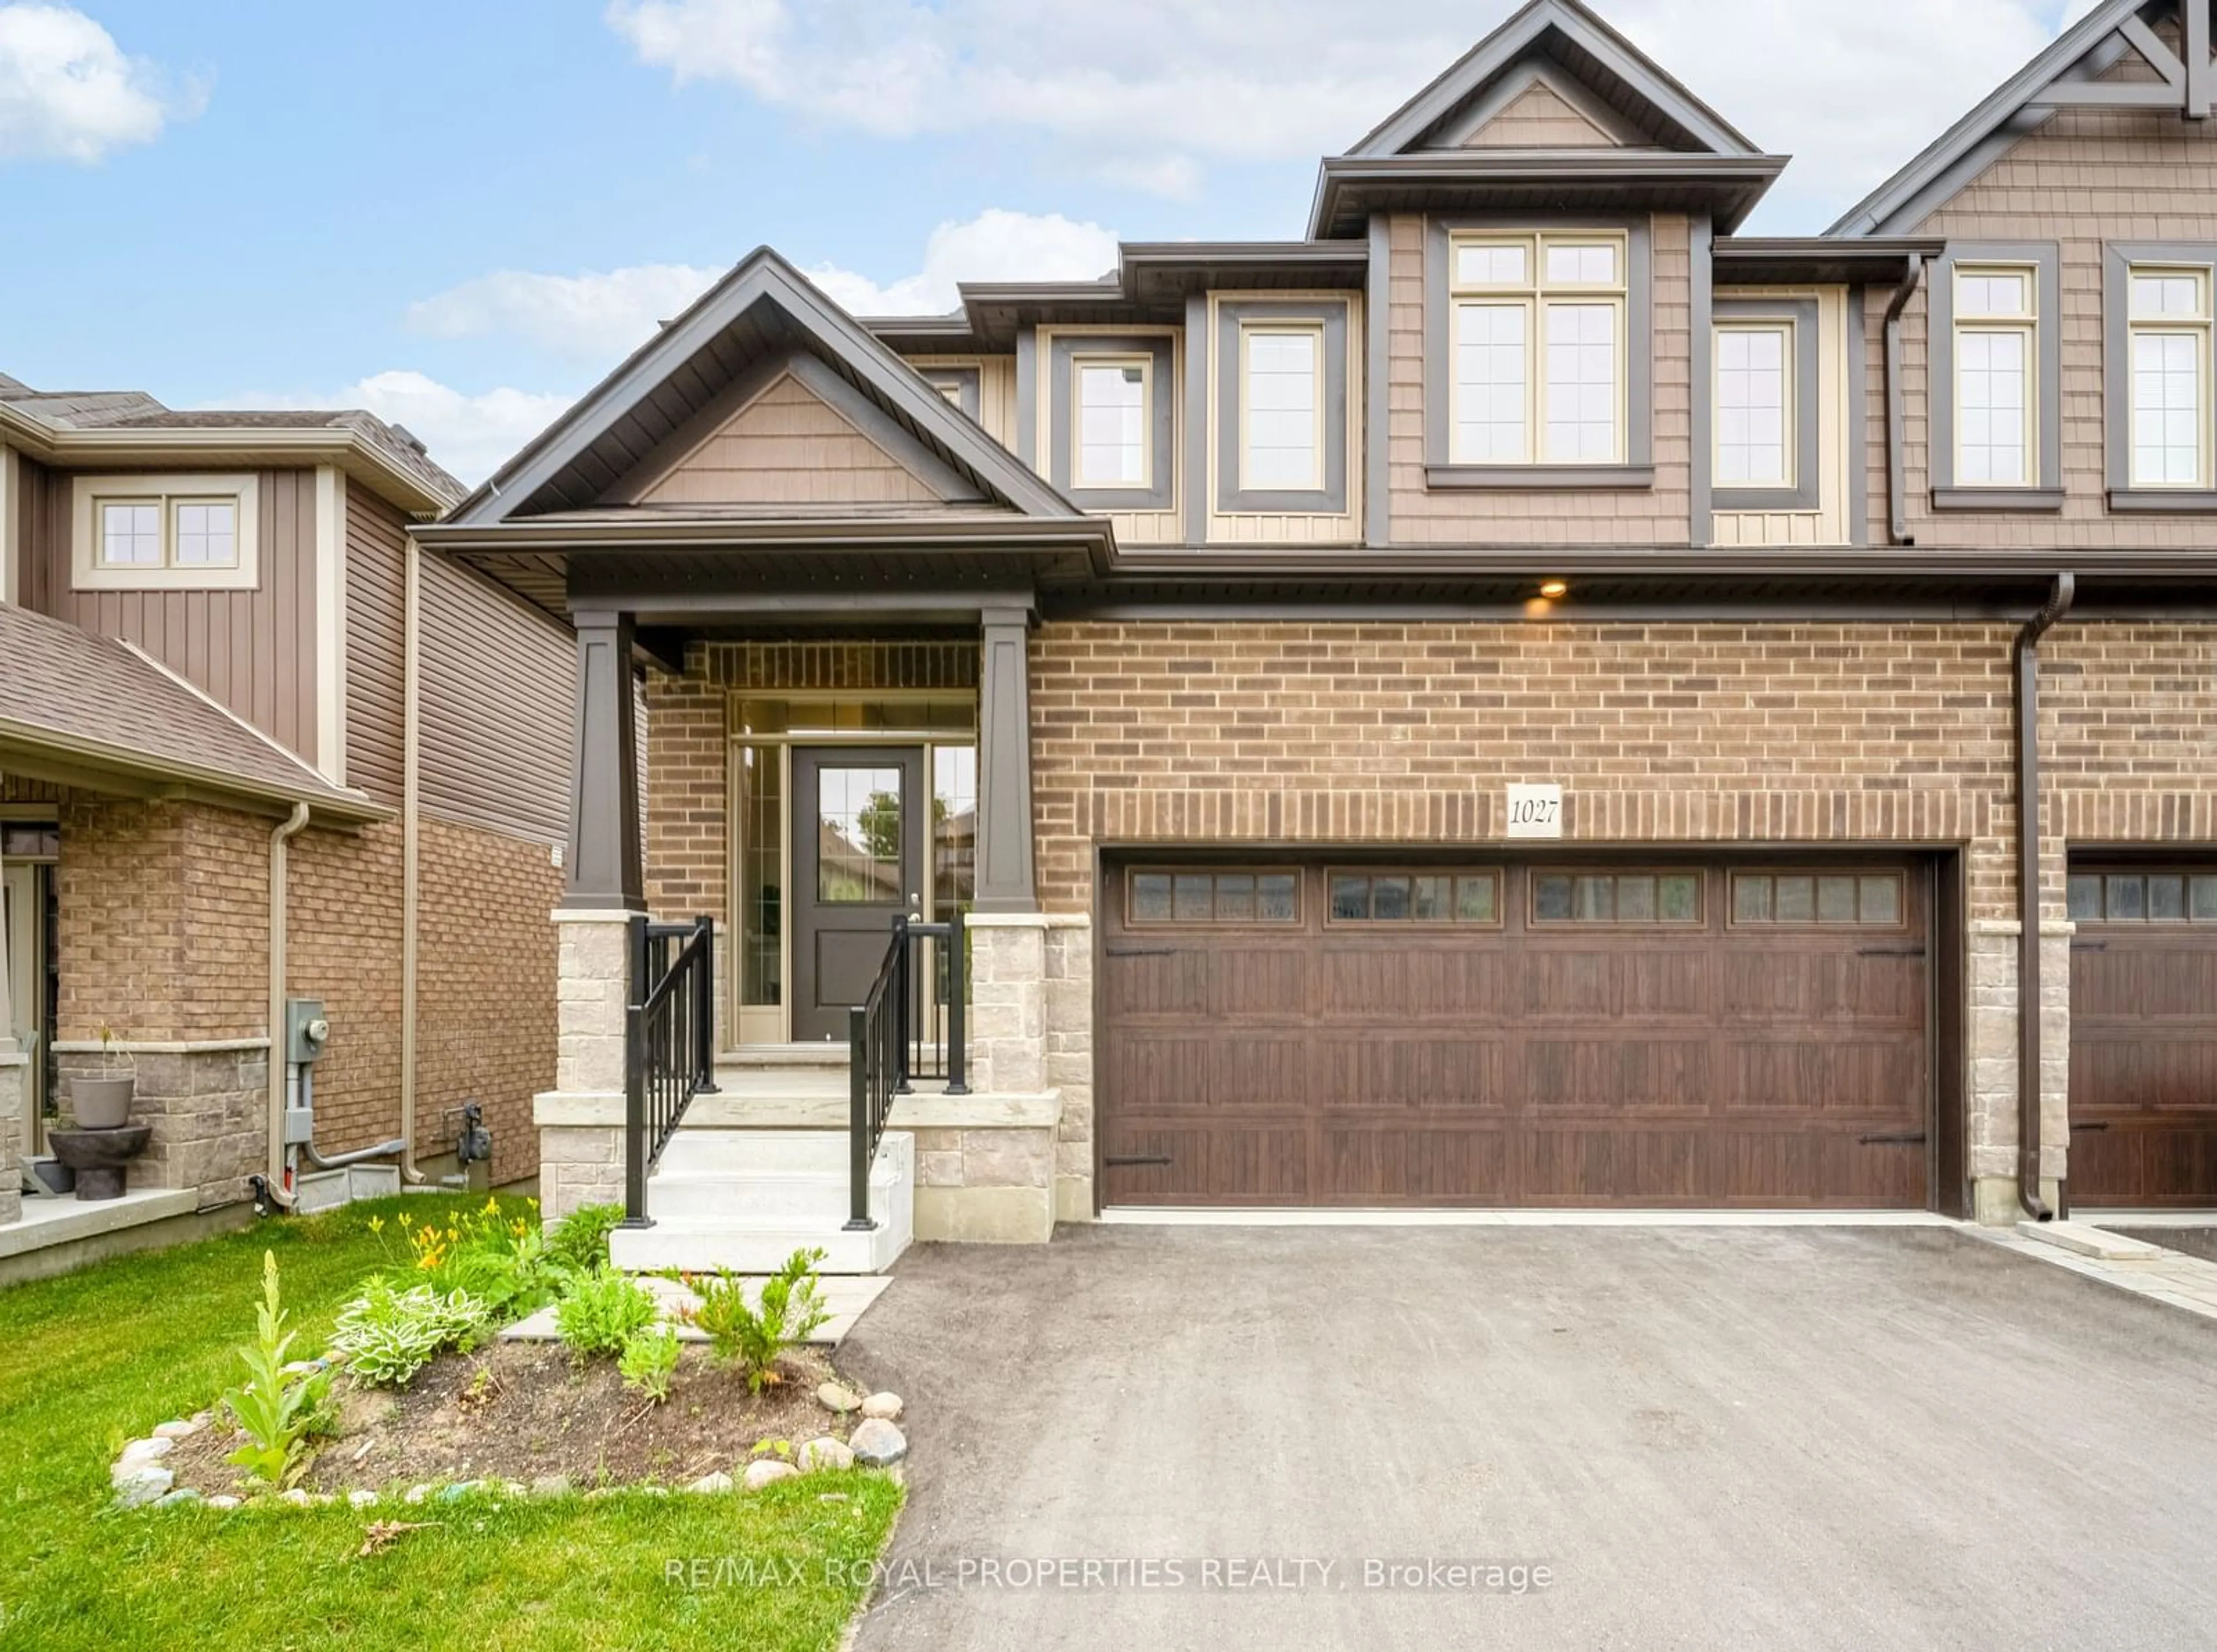 Home with brick exterior material for 1027 Wright Dr, Midland Ontario L4R 0E4